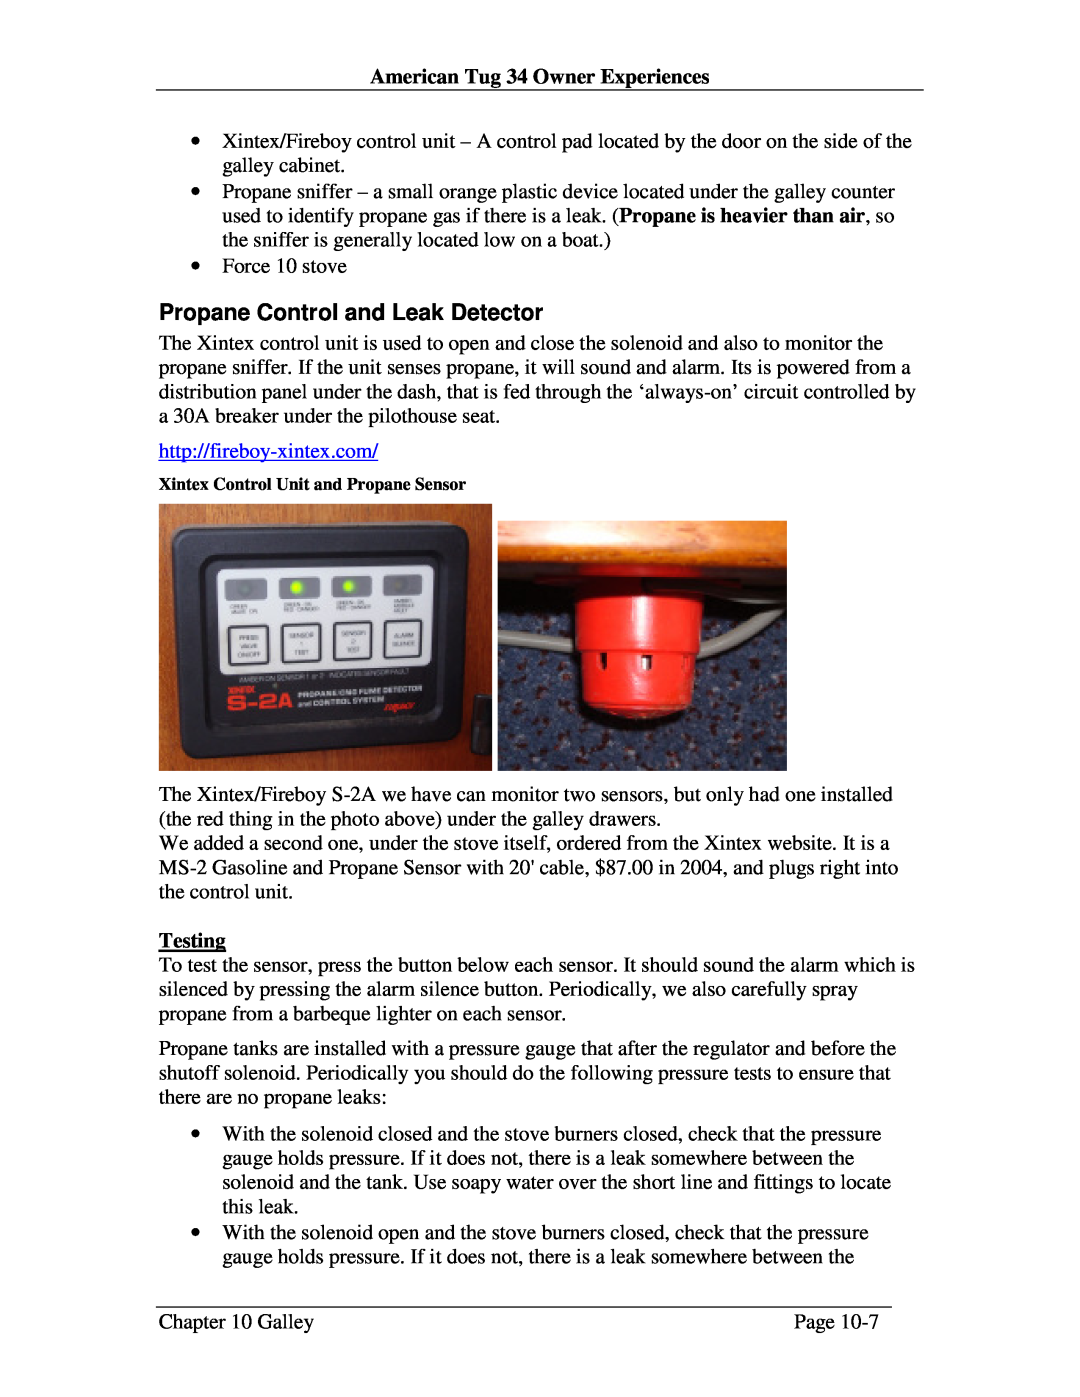 Nova Kool CHAPTER 10 user manual Propane Control and Leak Detector, Testing, American Tug 34 Owner Experiences 